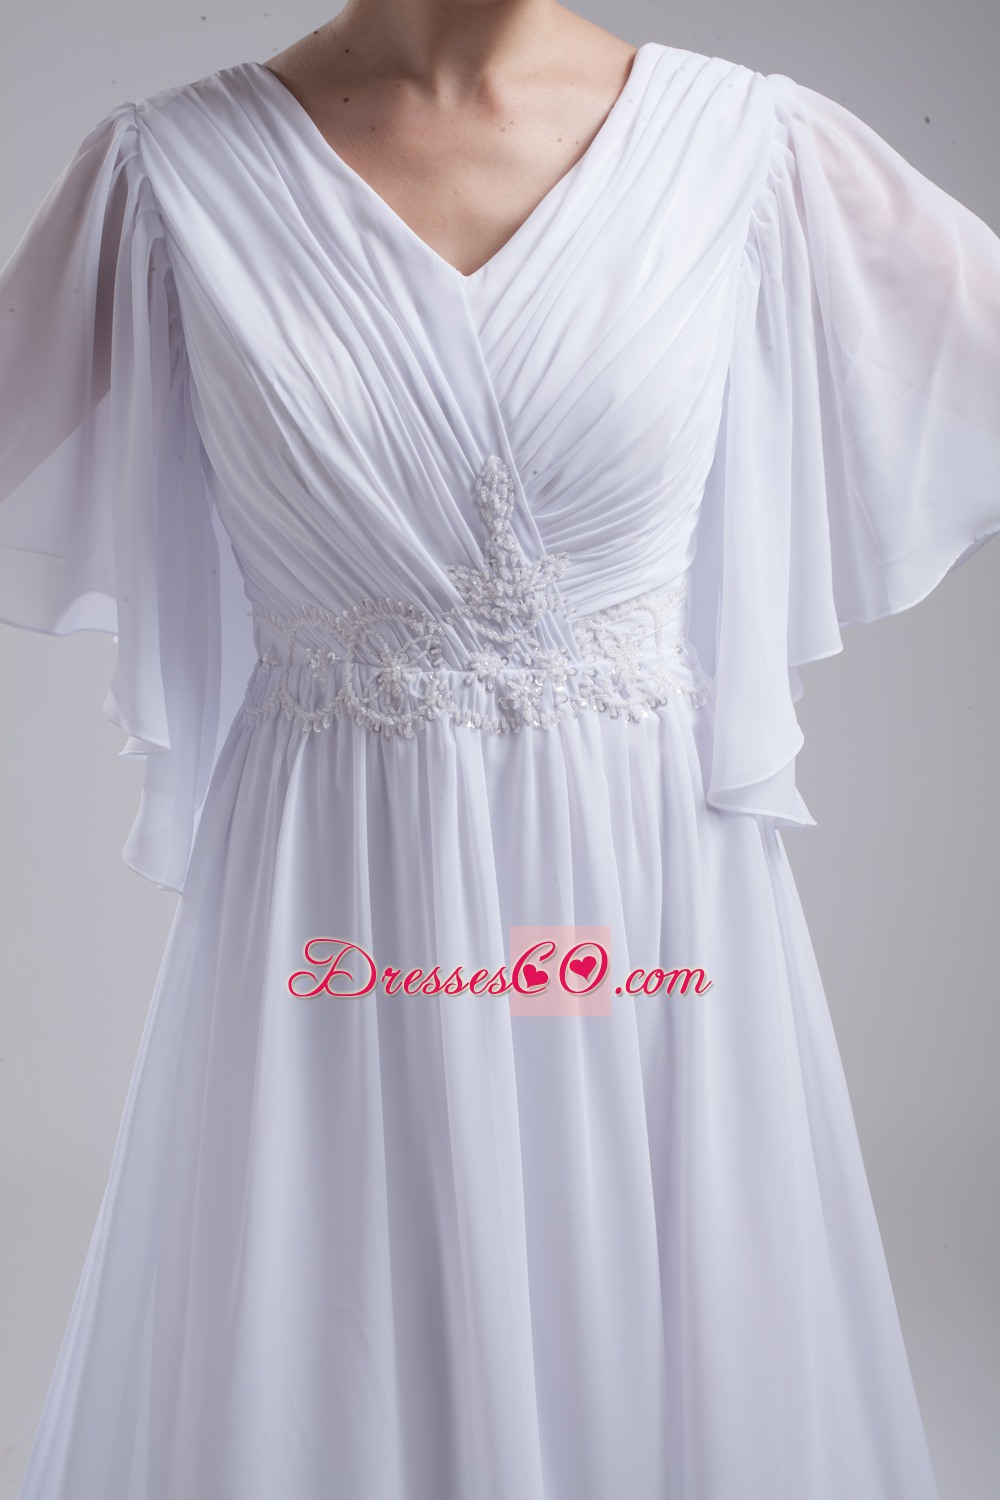 Empire V-neck Ruching Half Sleeves Cheap Wedding Dress